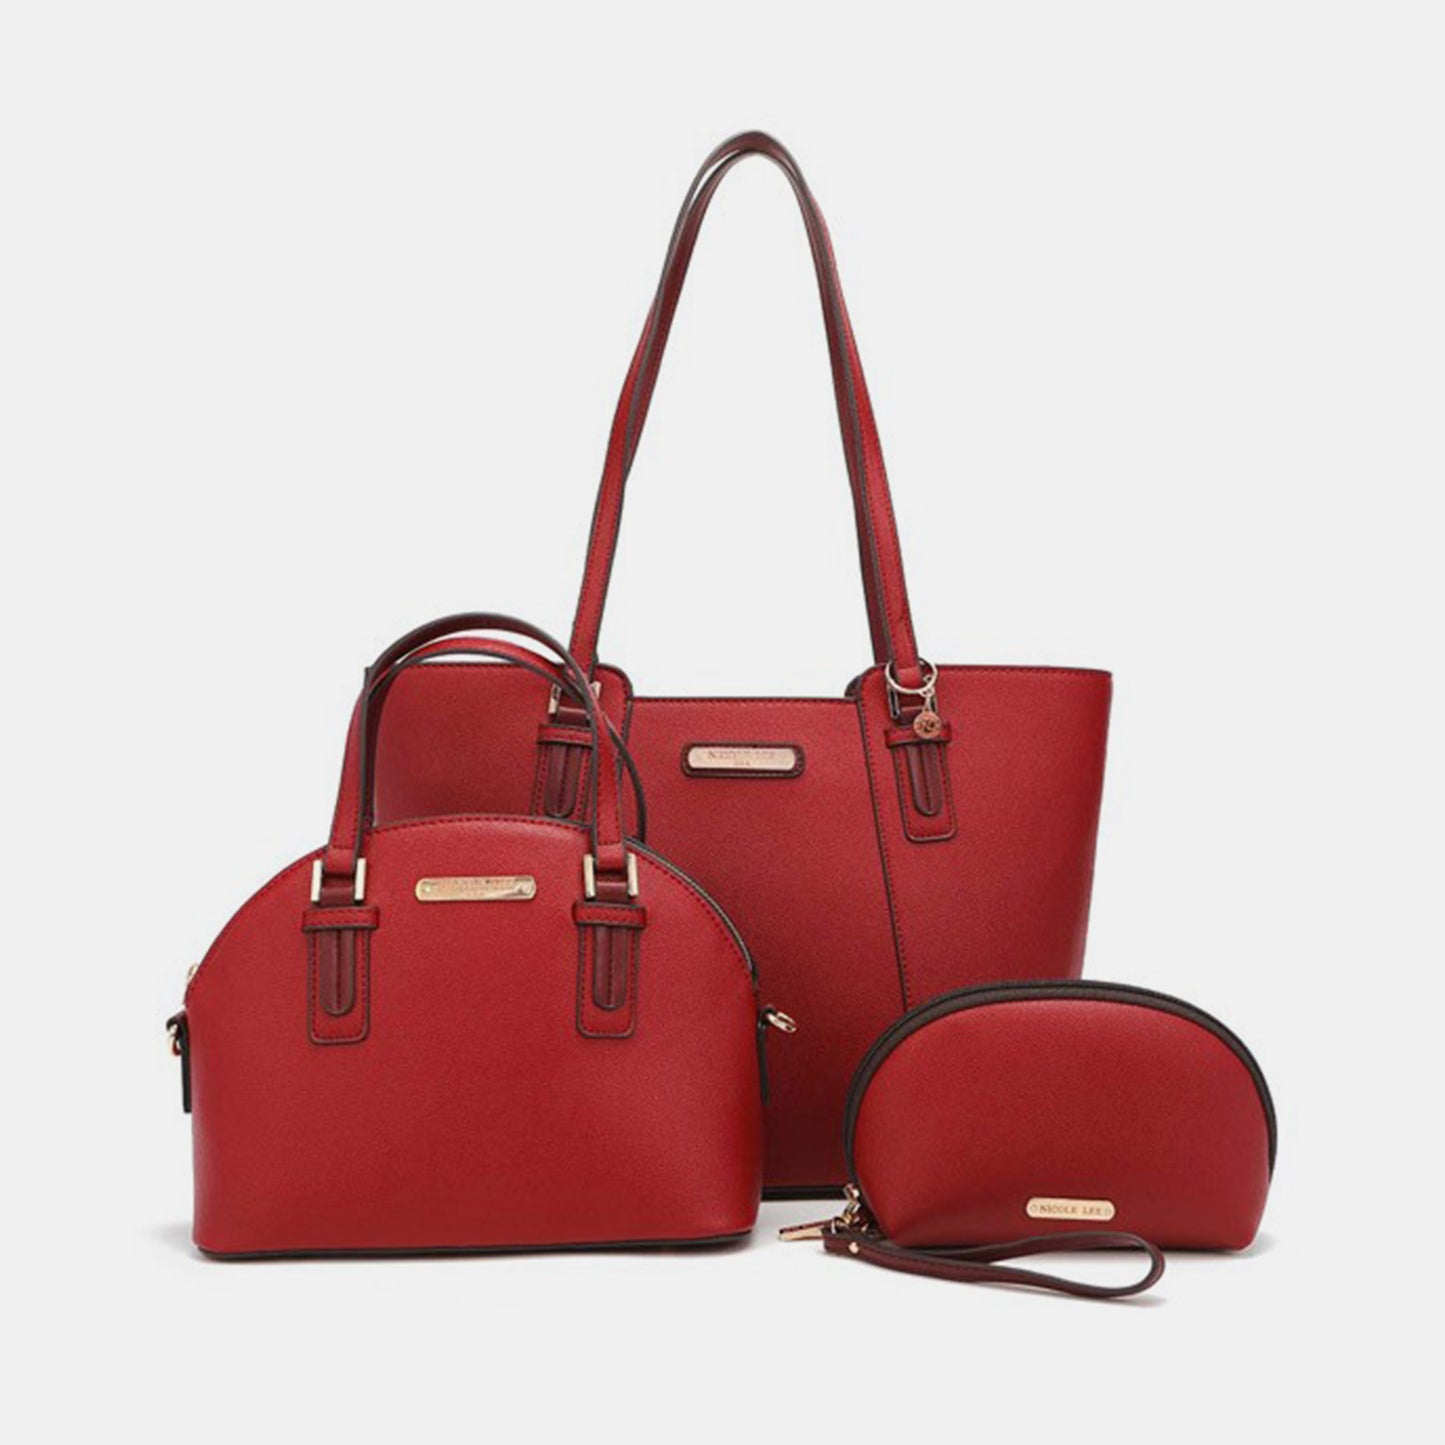 Nicole Lee USA 3-Piece Handbag Set RED One Size